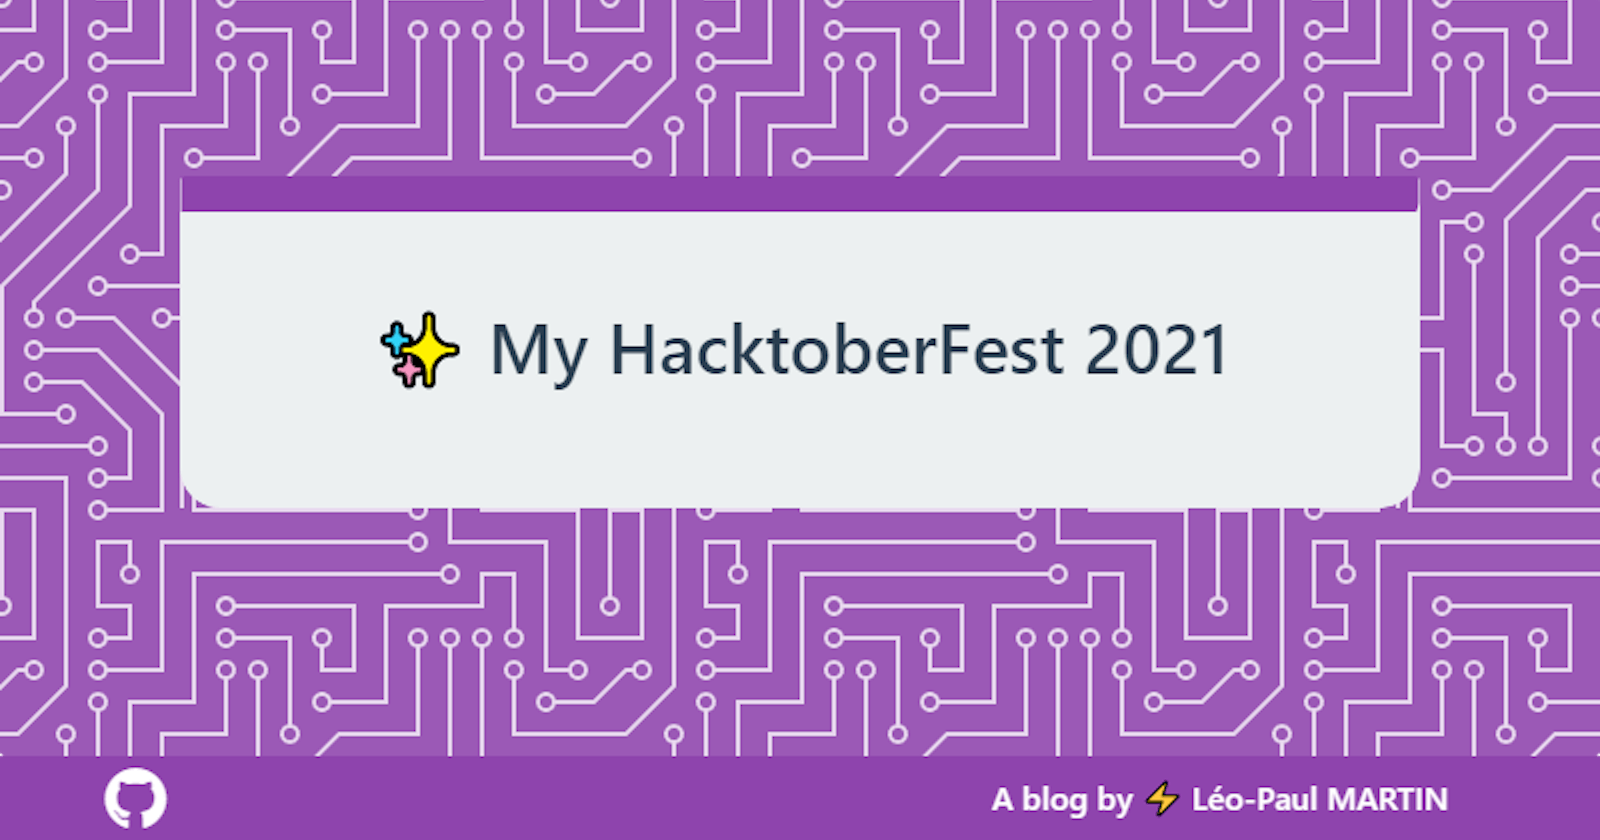 ✨ My HacktoberFest 2021